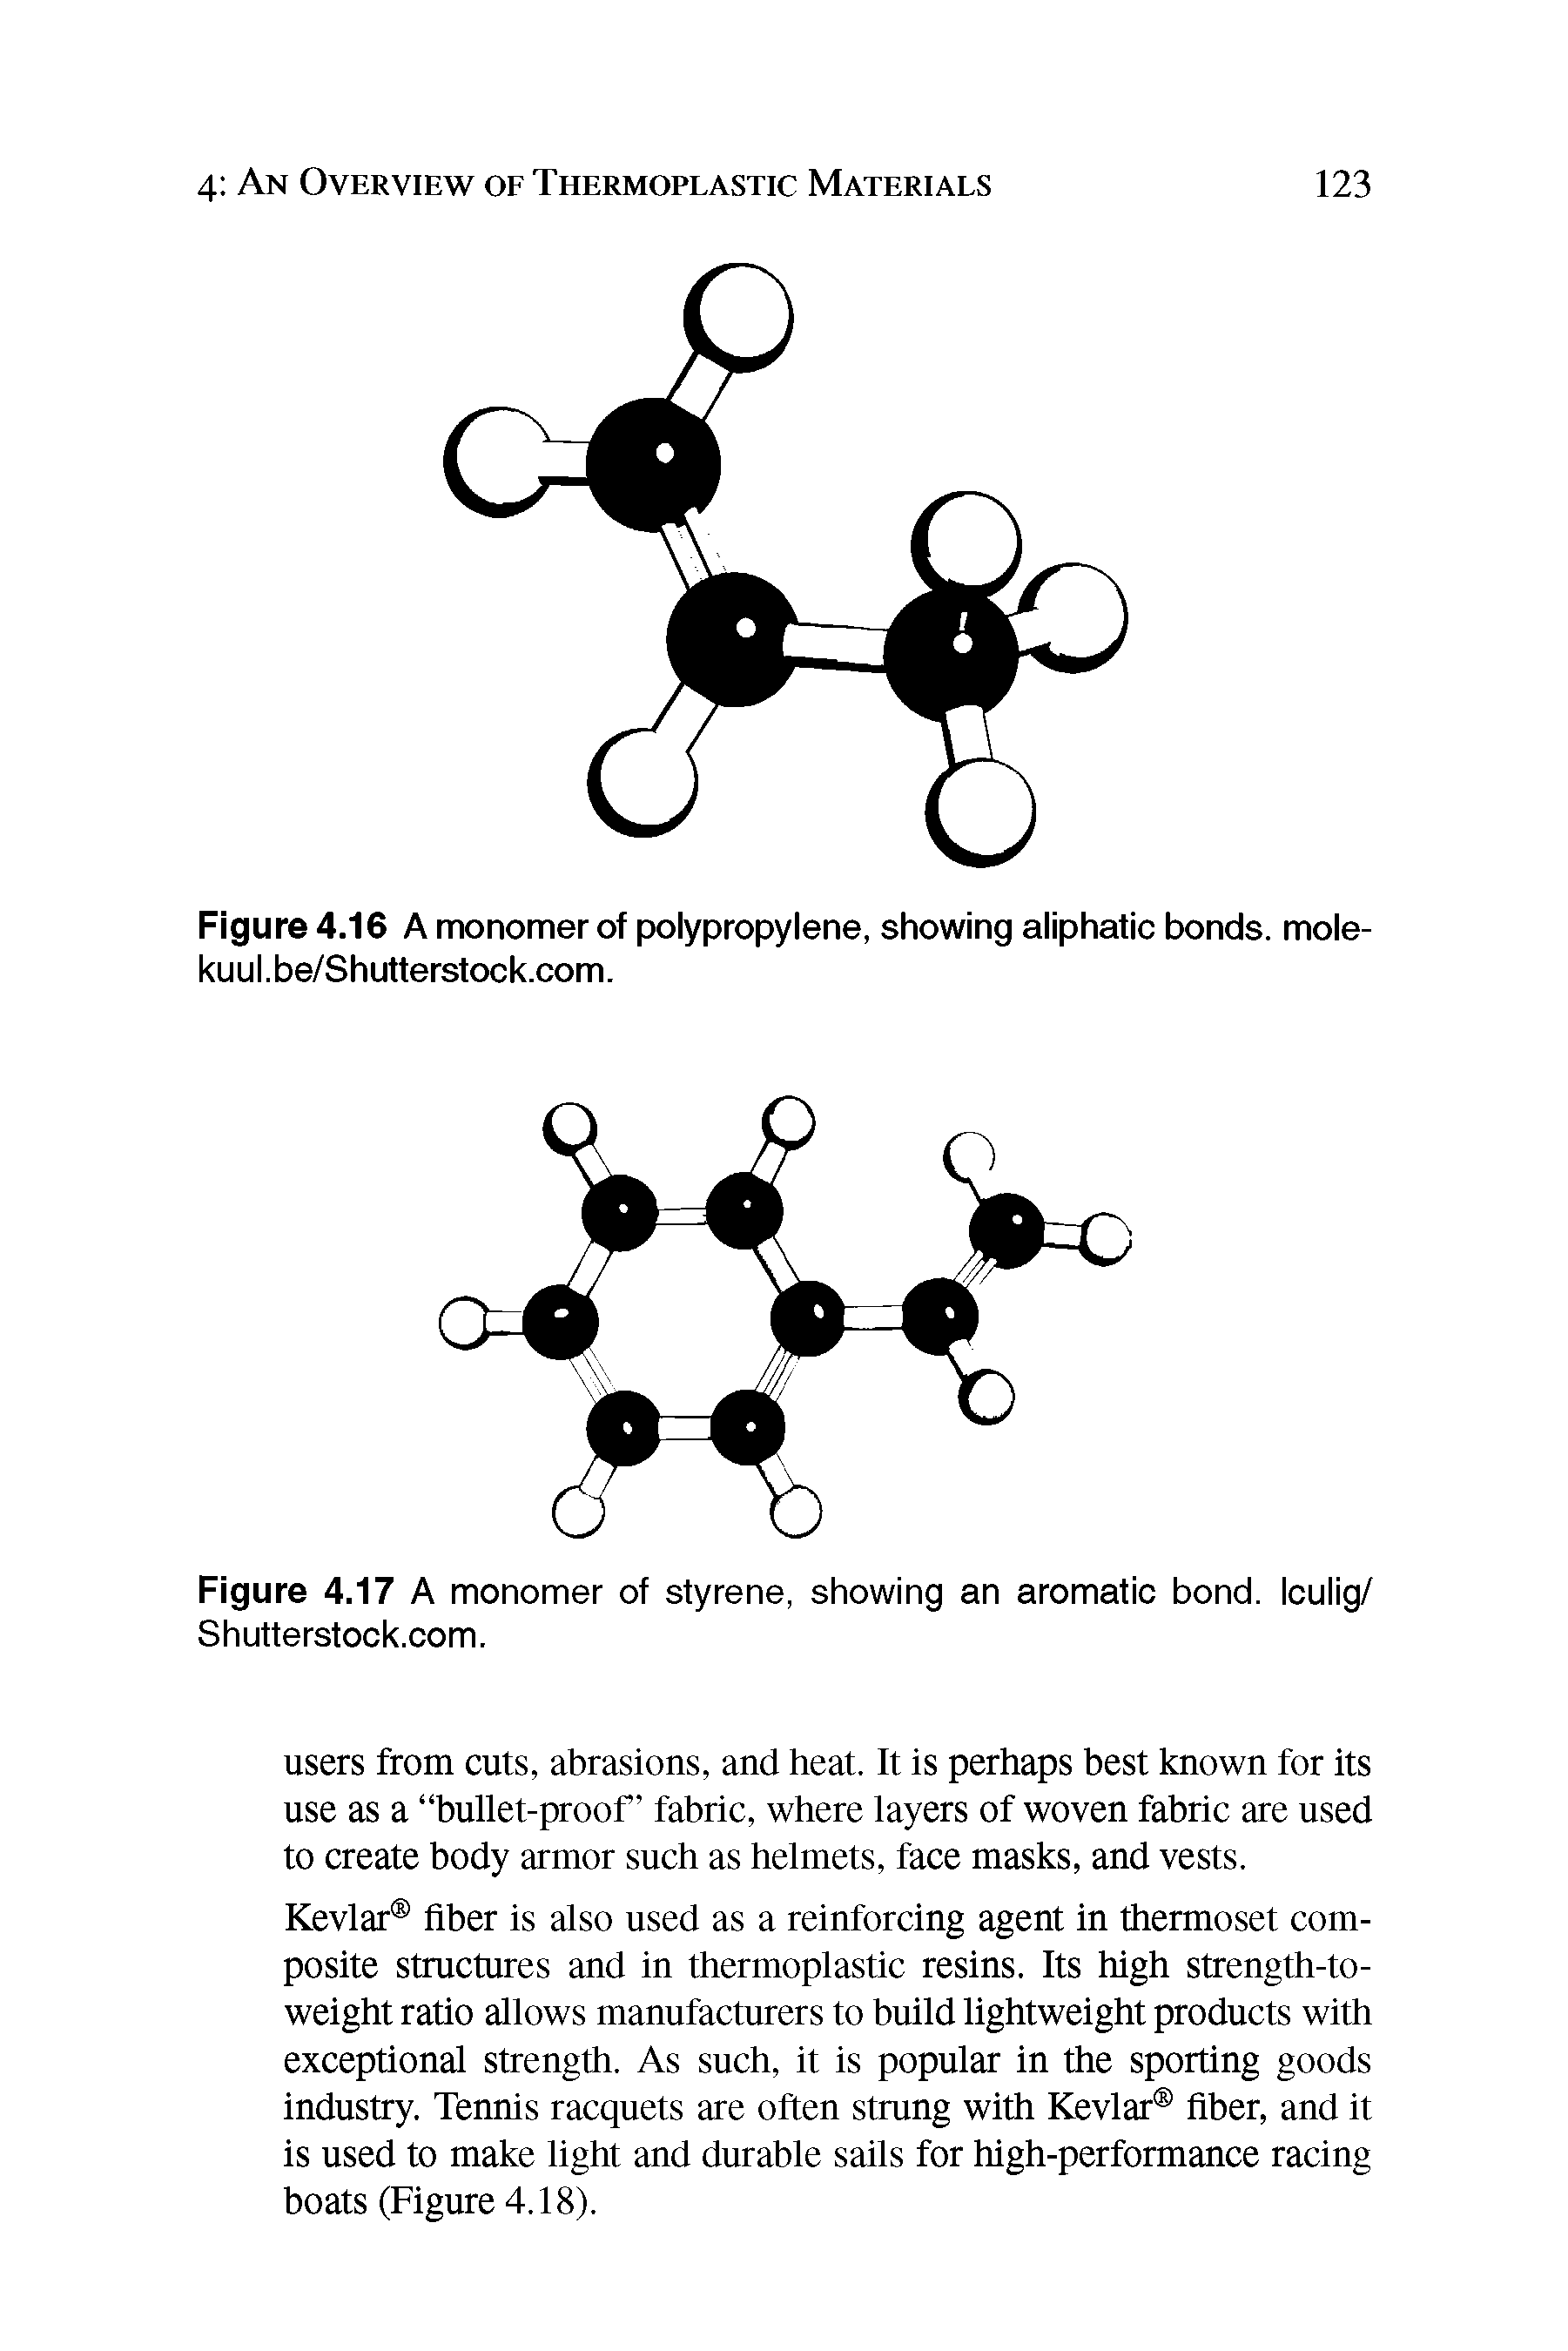 Figure 4.16 A monomer of polypropylene, showing aliphatic bonds, mole-kuul.be/Shutterstock.com.